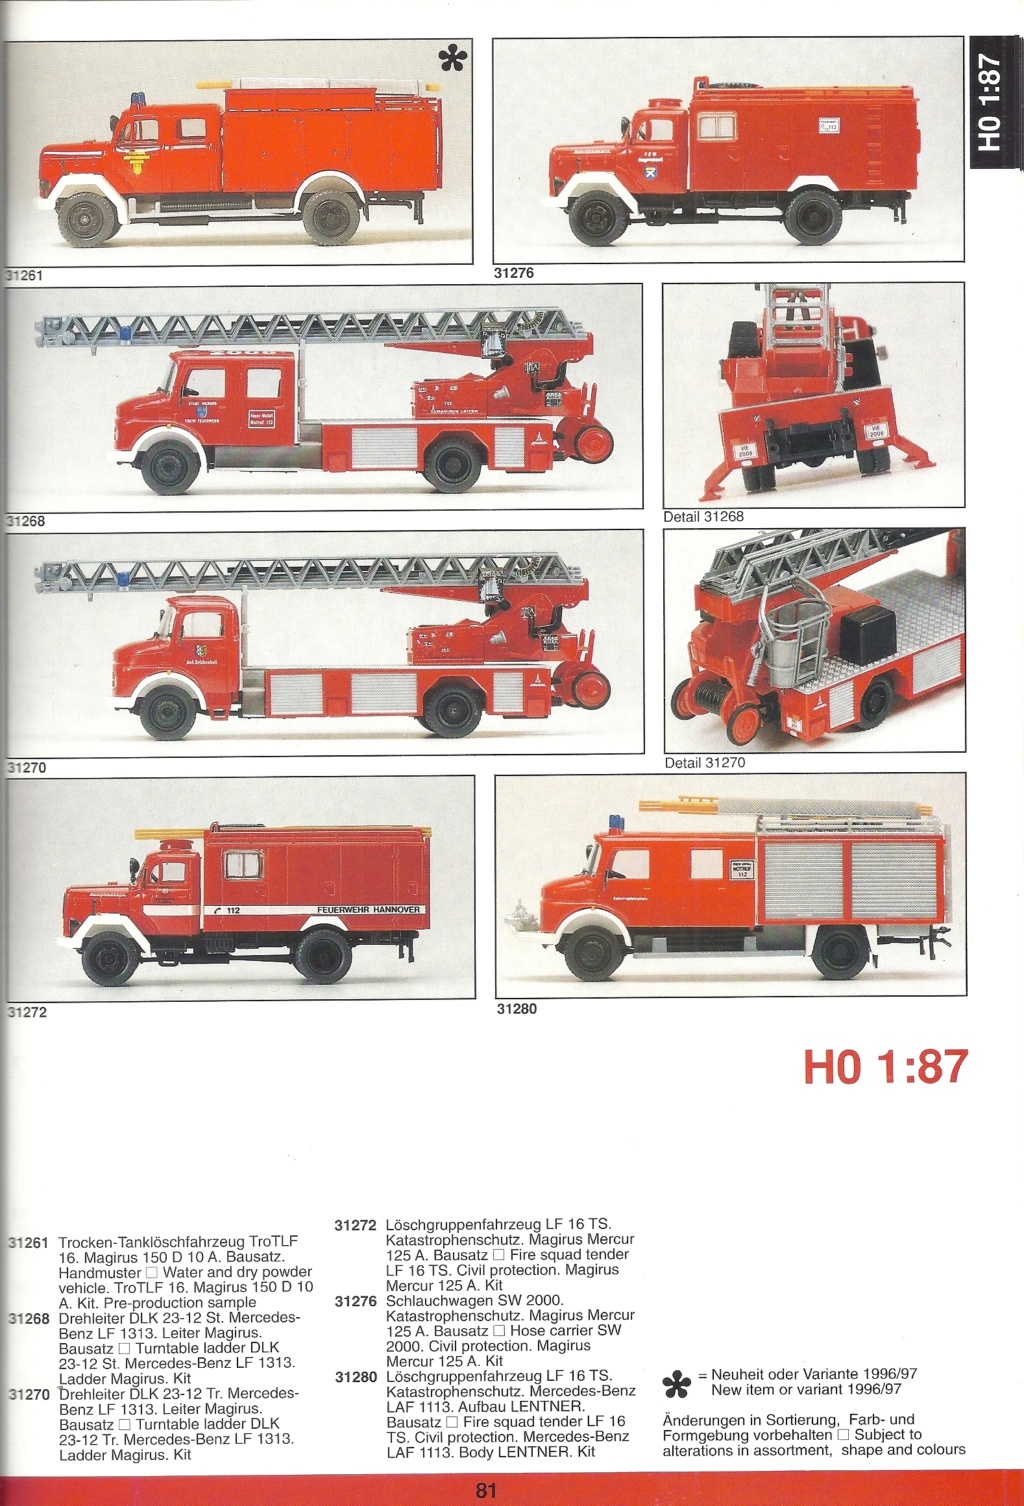 preiser - [PREISER 1996] Catalogue K22 1996 Preis971